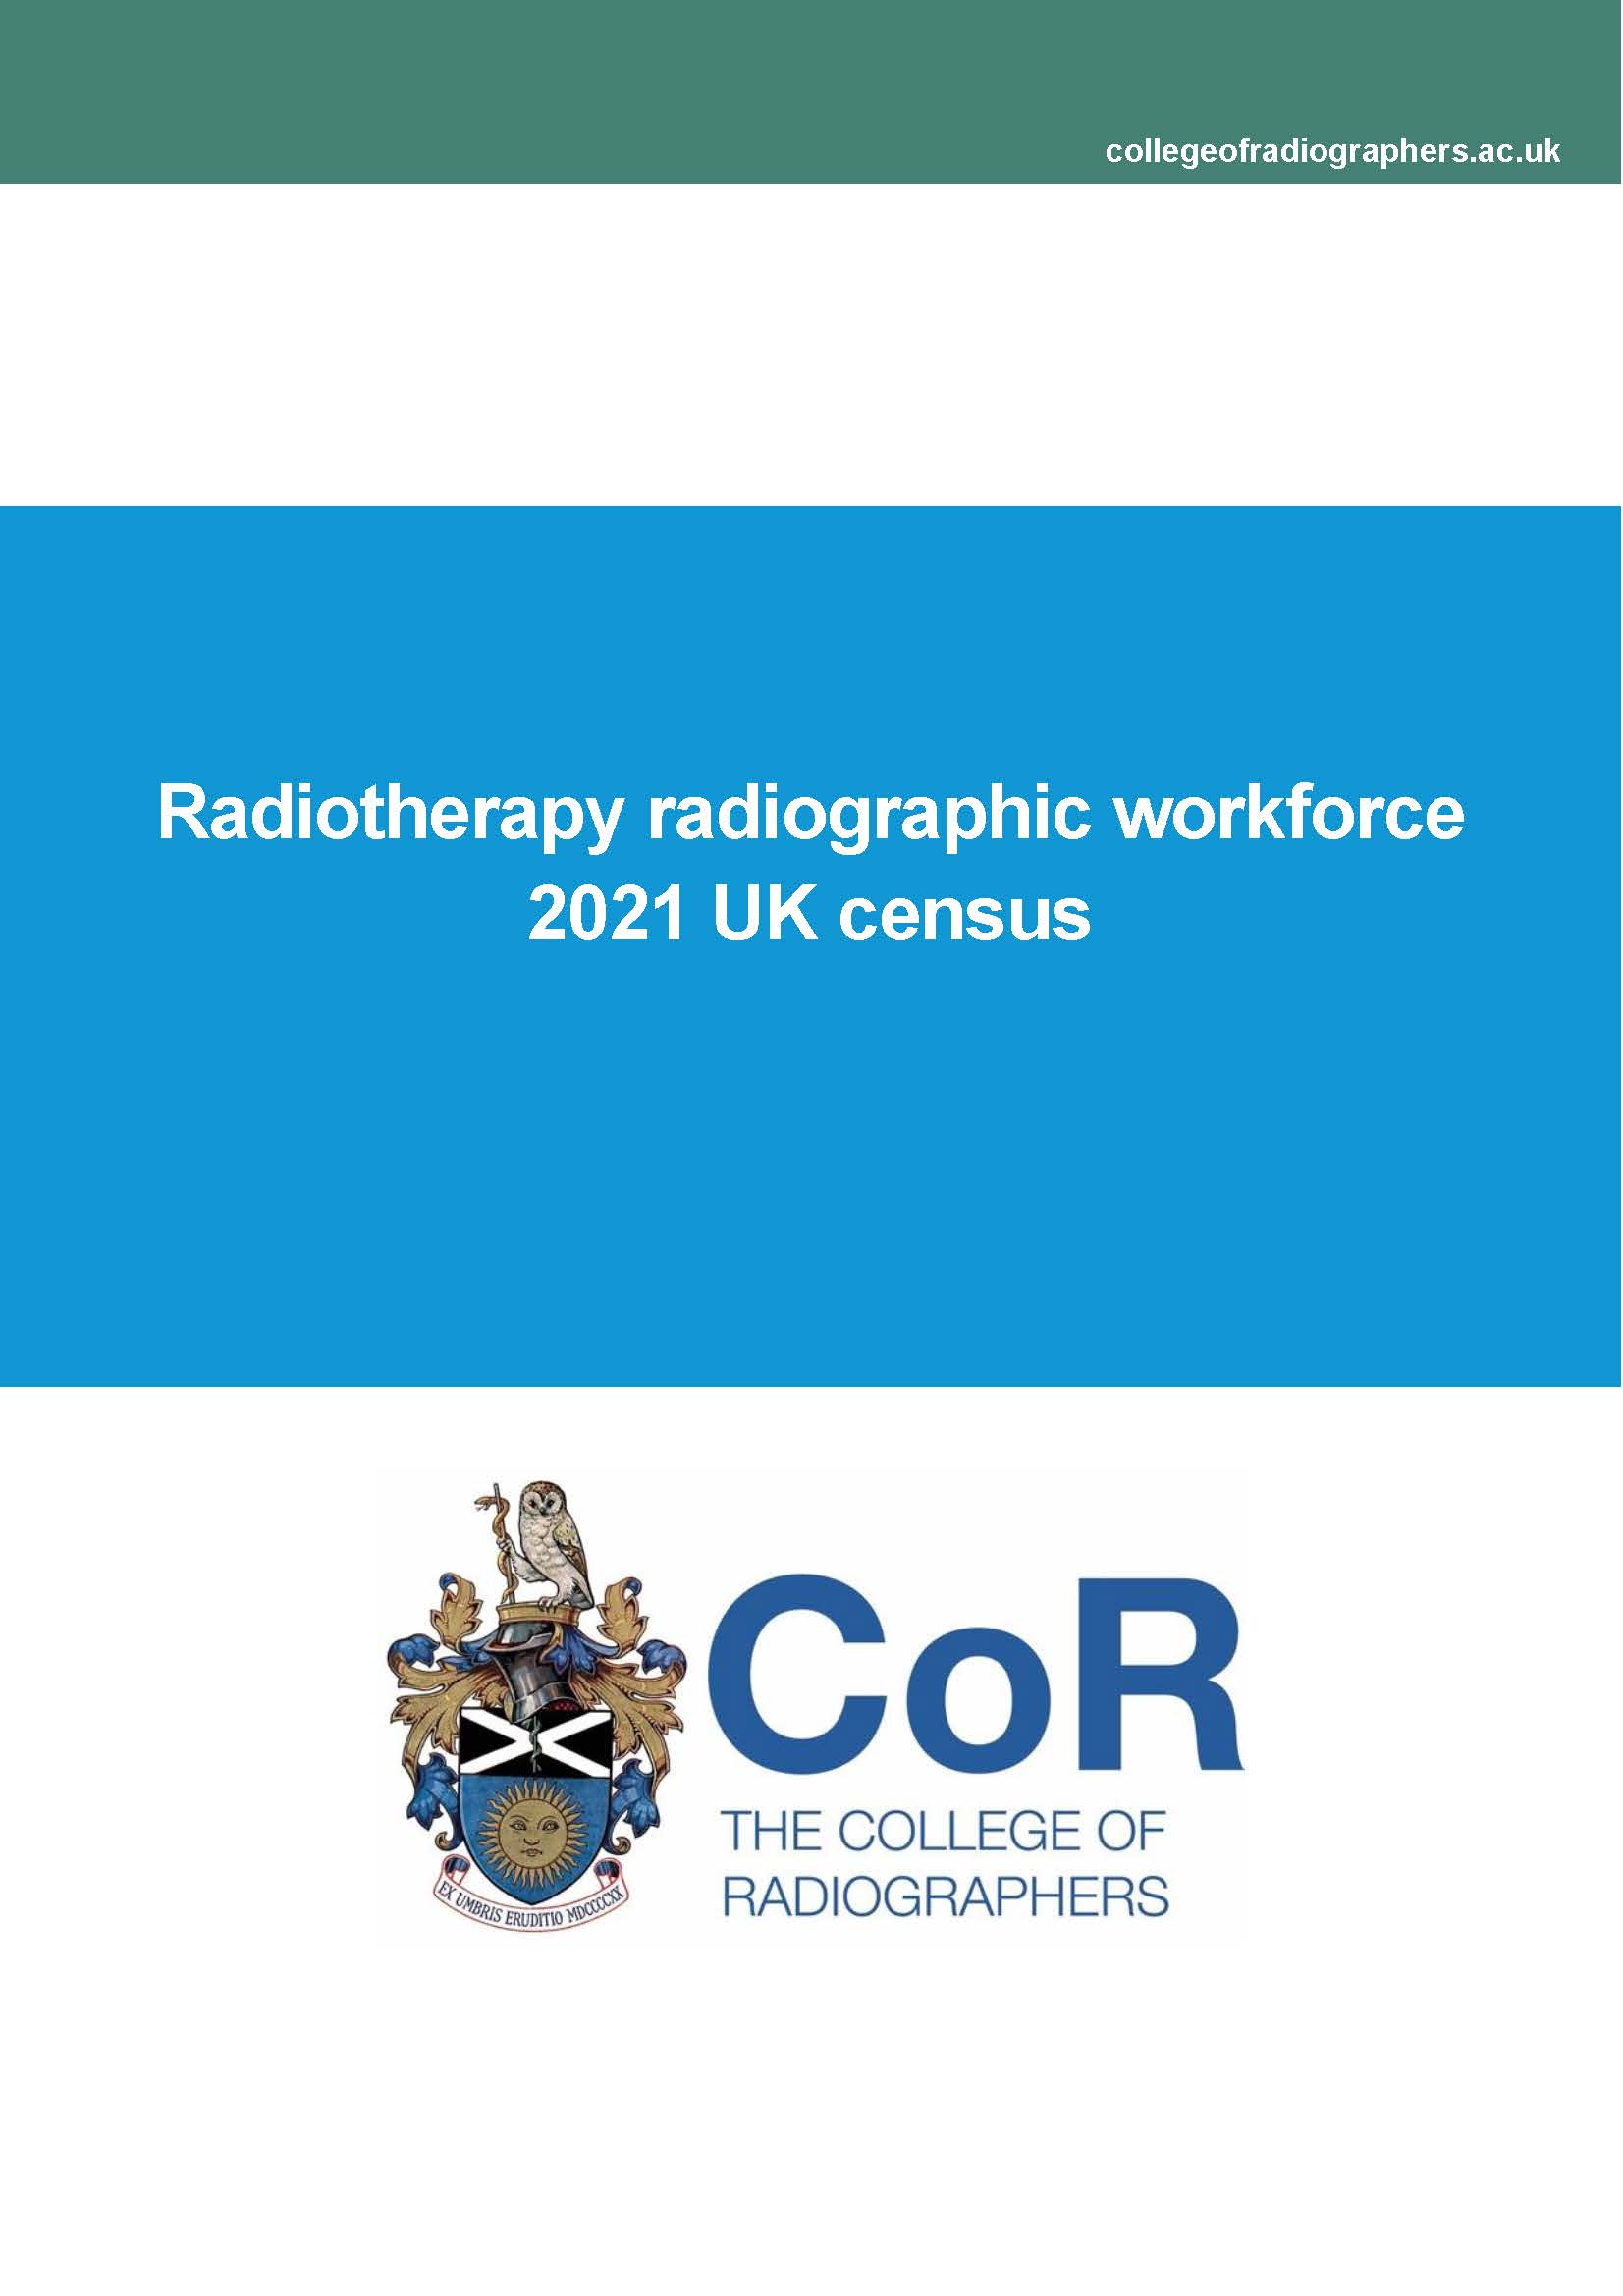 Radiotherapy Radiographic Workforce UK Census 2021